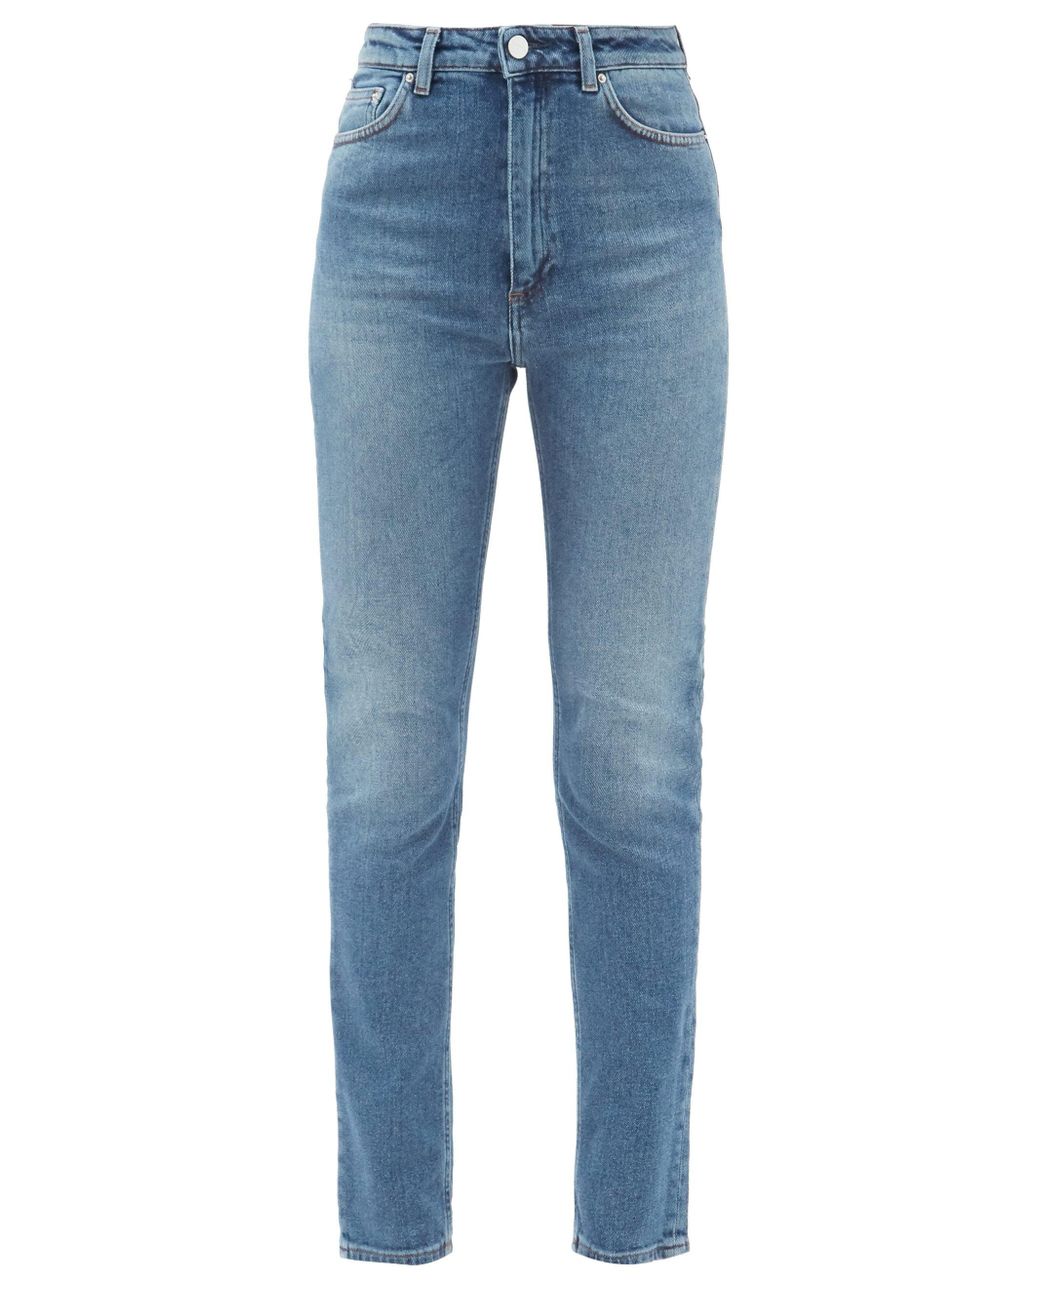 Totême Denim New Standard High-rise Skinny-leg Jeans in Denim (Blue) - Lyst